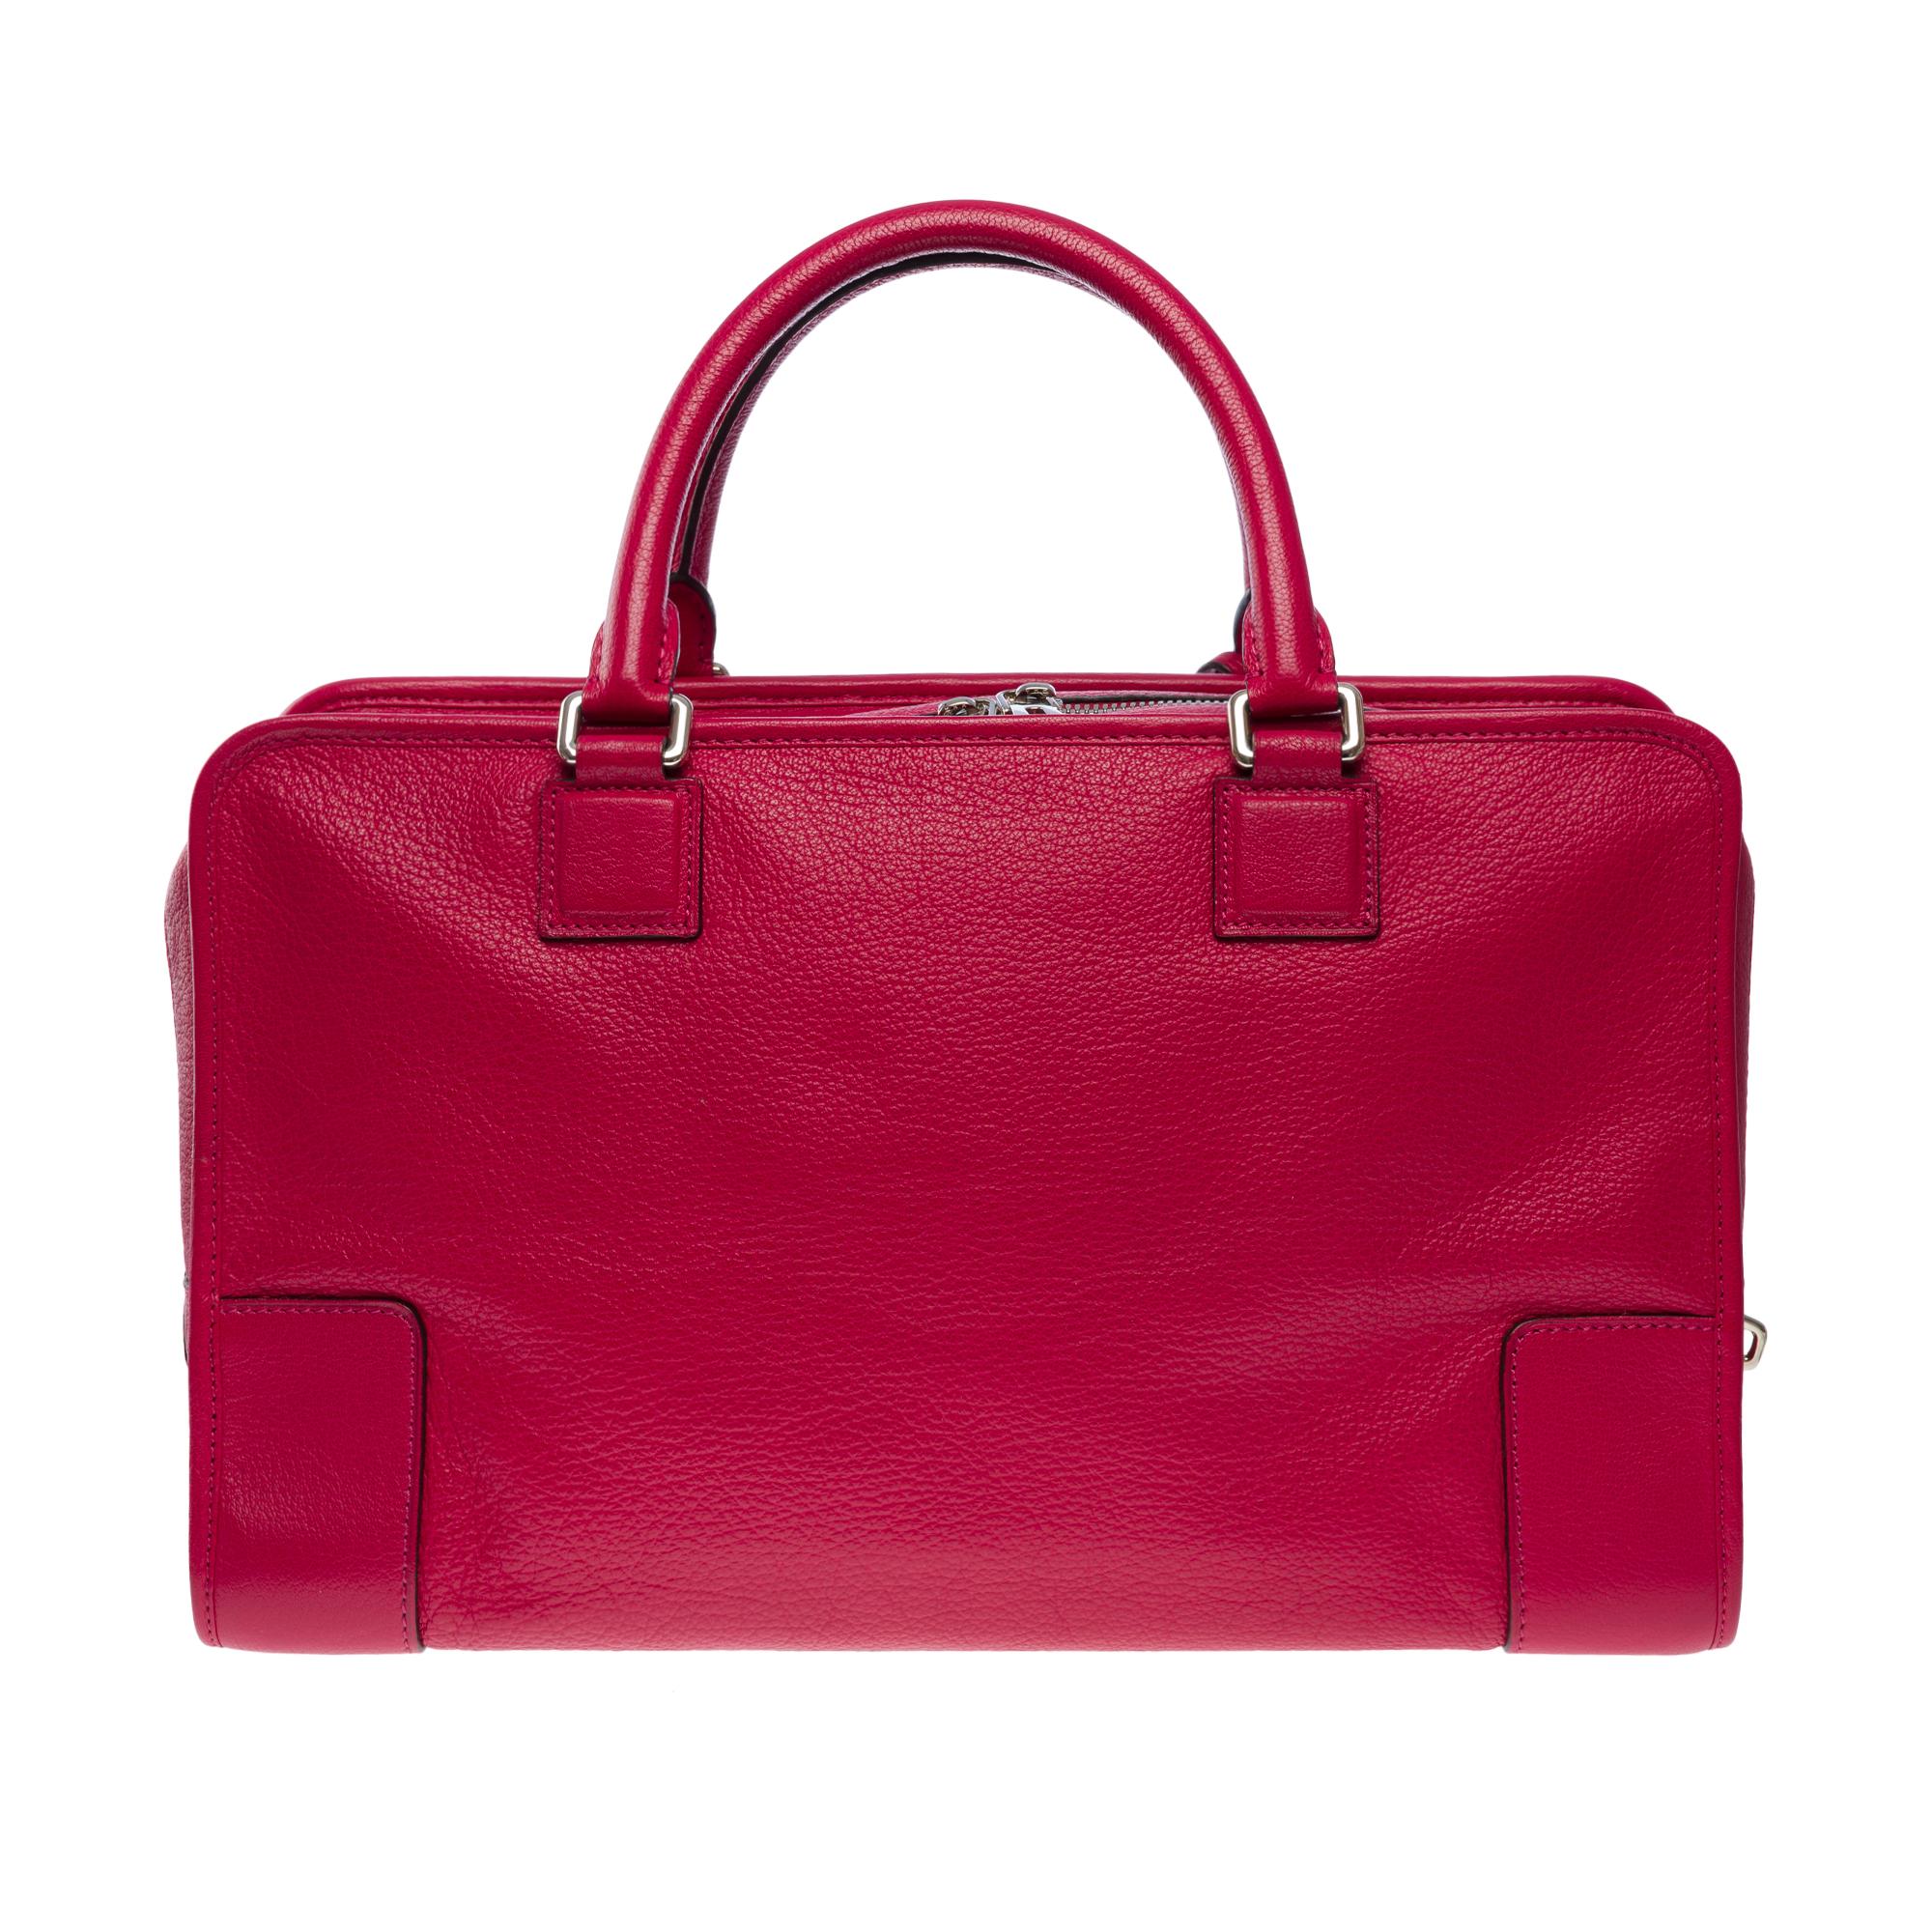 Women's Delightful Loewe Amazona 36 (GM) handbag in red leather, SHW For Sale